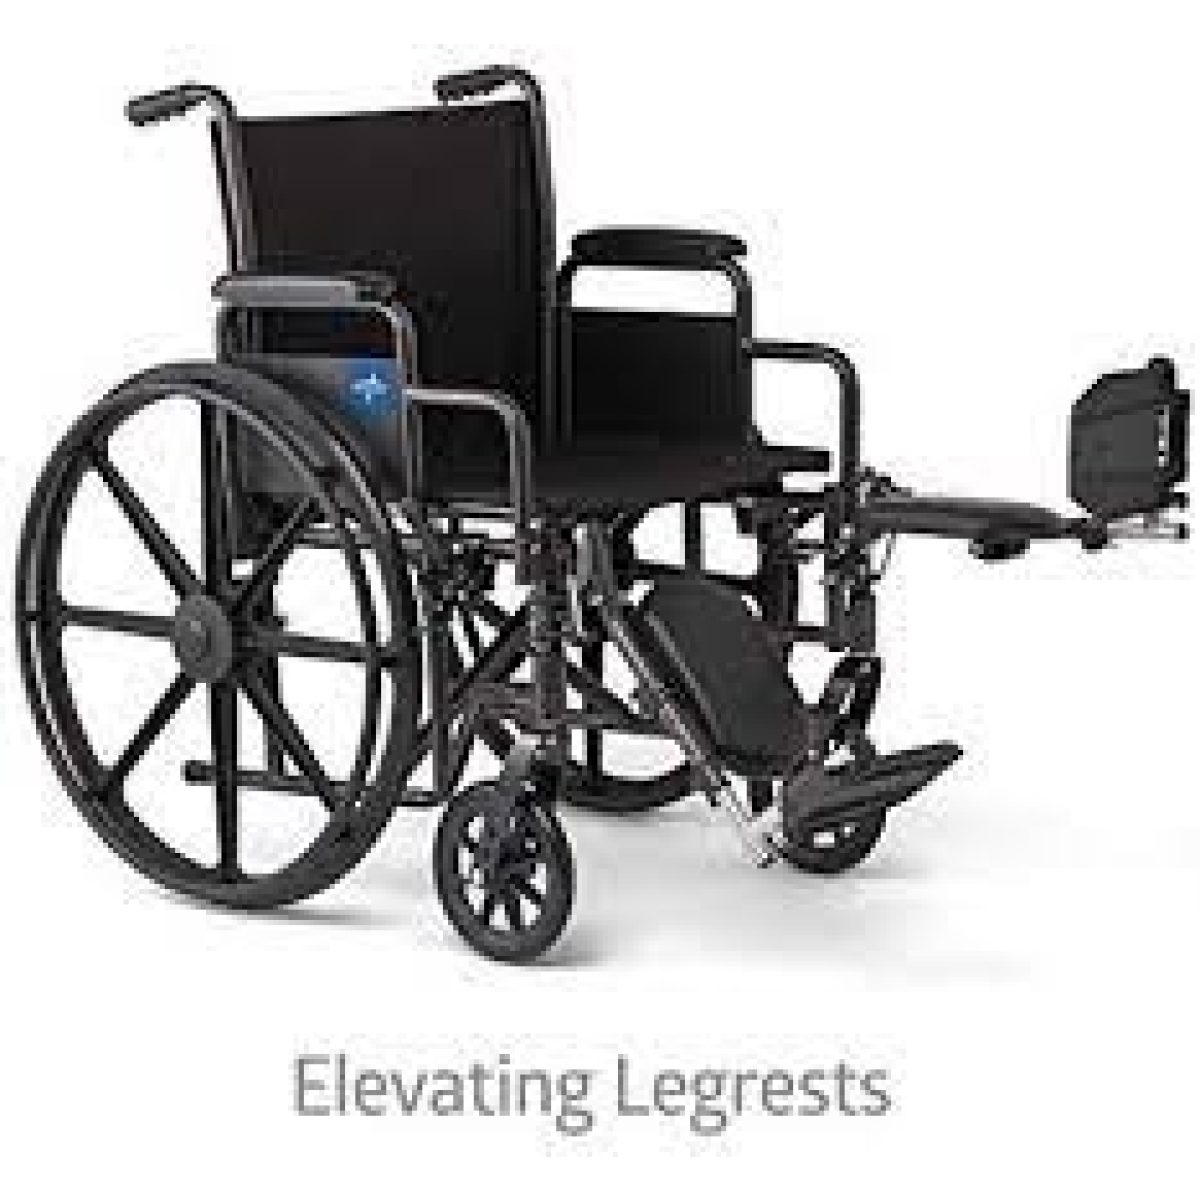 Wheelchair – Weight capacity 300 lbs. 2